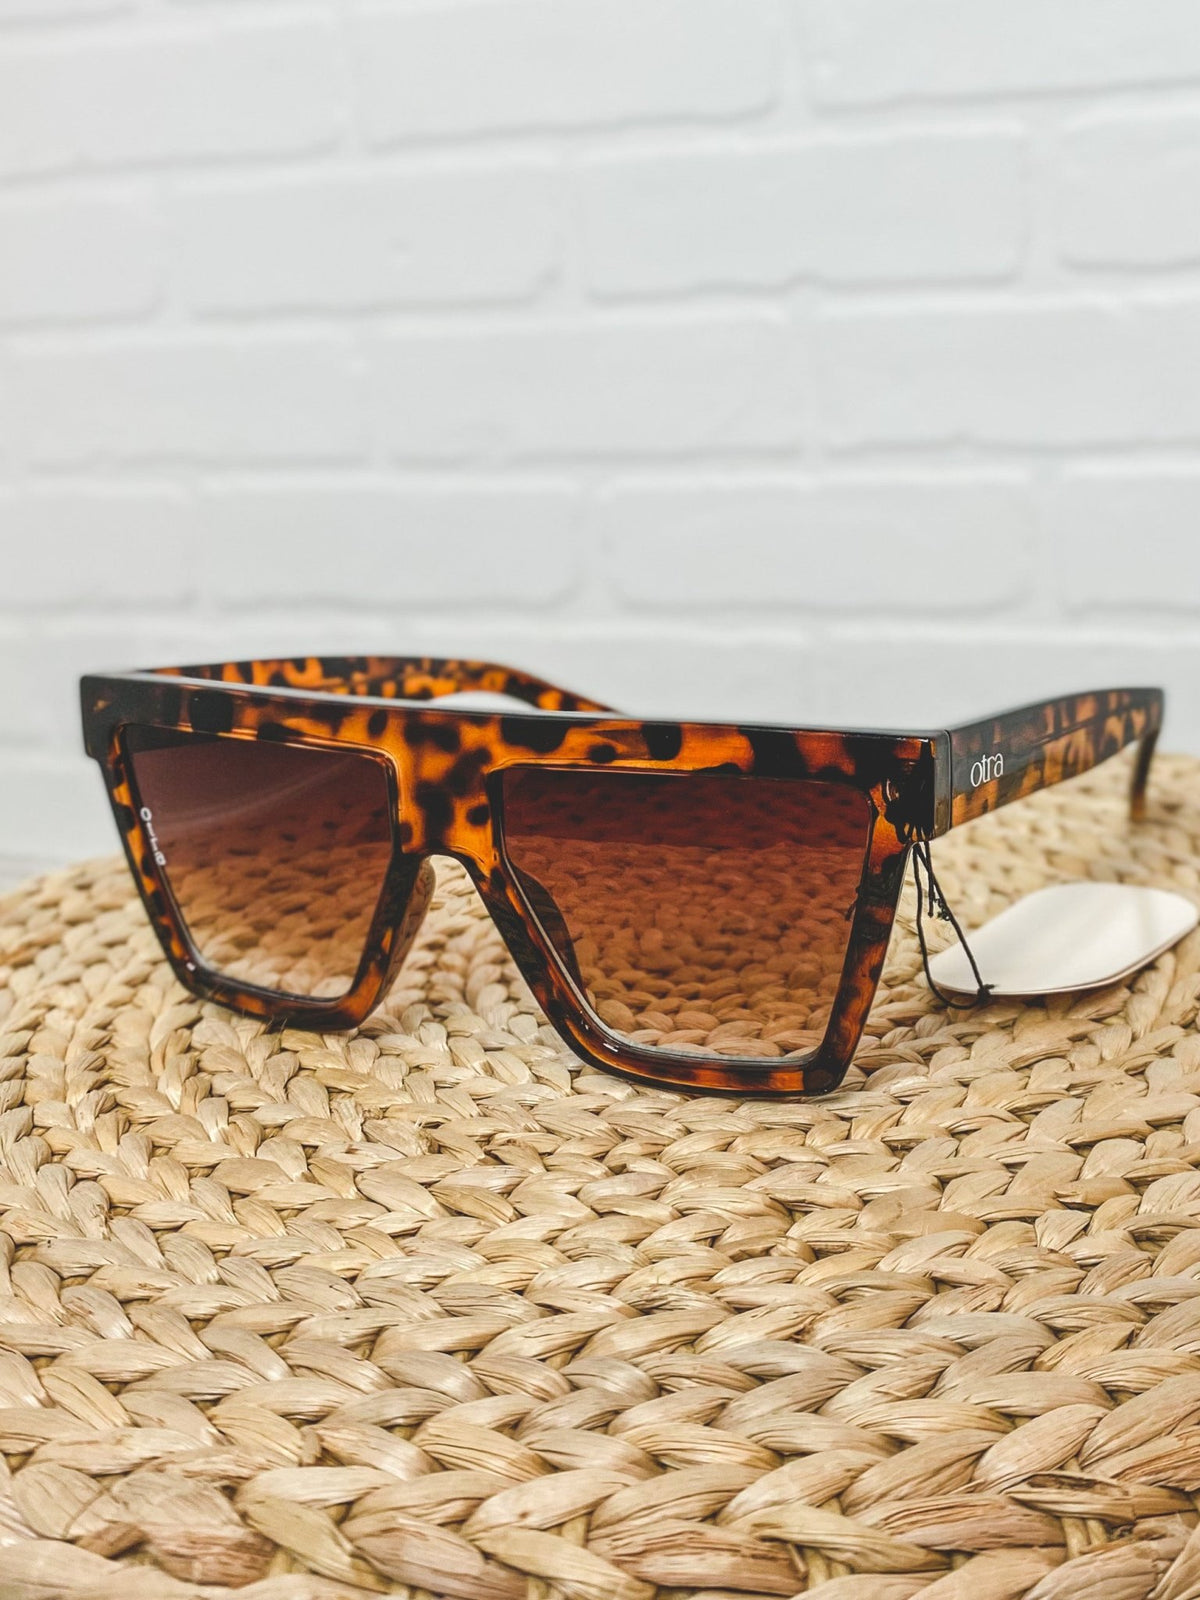 Otra Rae sunglasses tortoiseshell - Stylish Sunglasses - Cute Sunglasses at Lush Fashion Lounge Boutique in Oklahoma